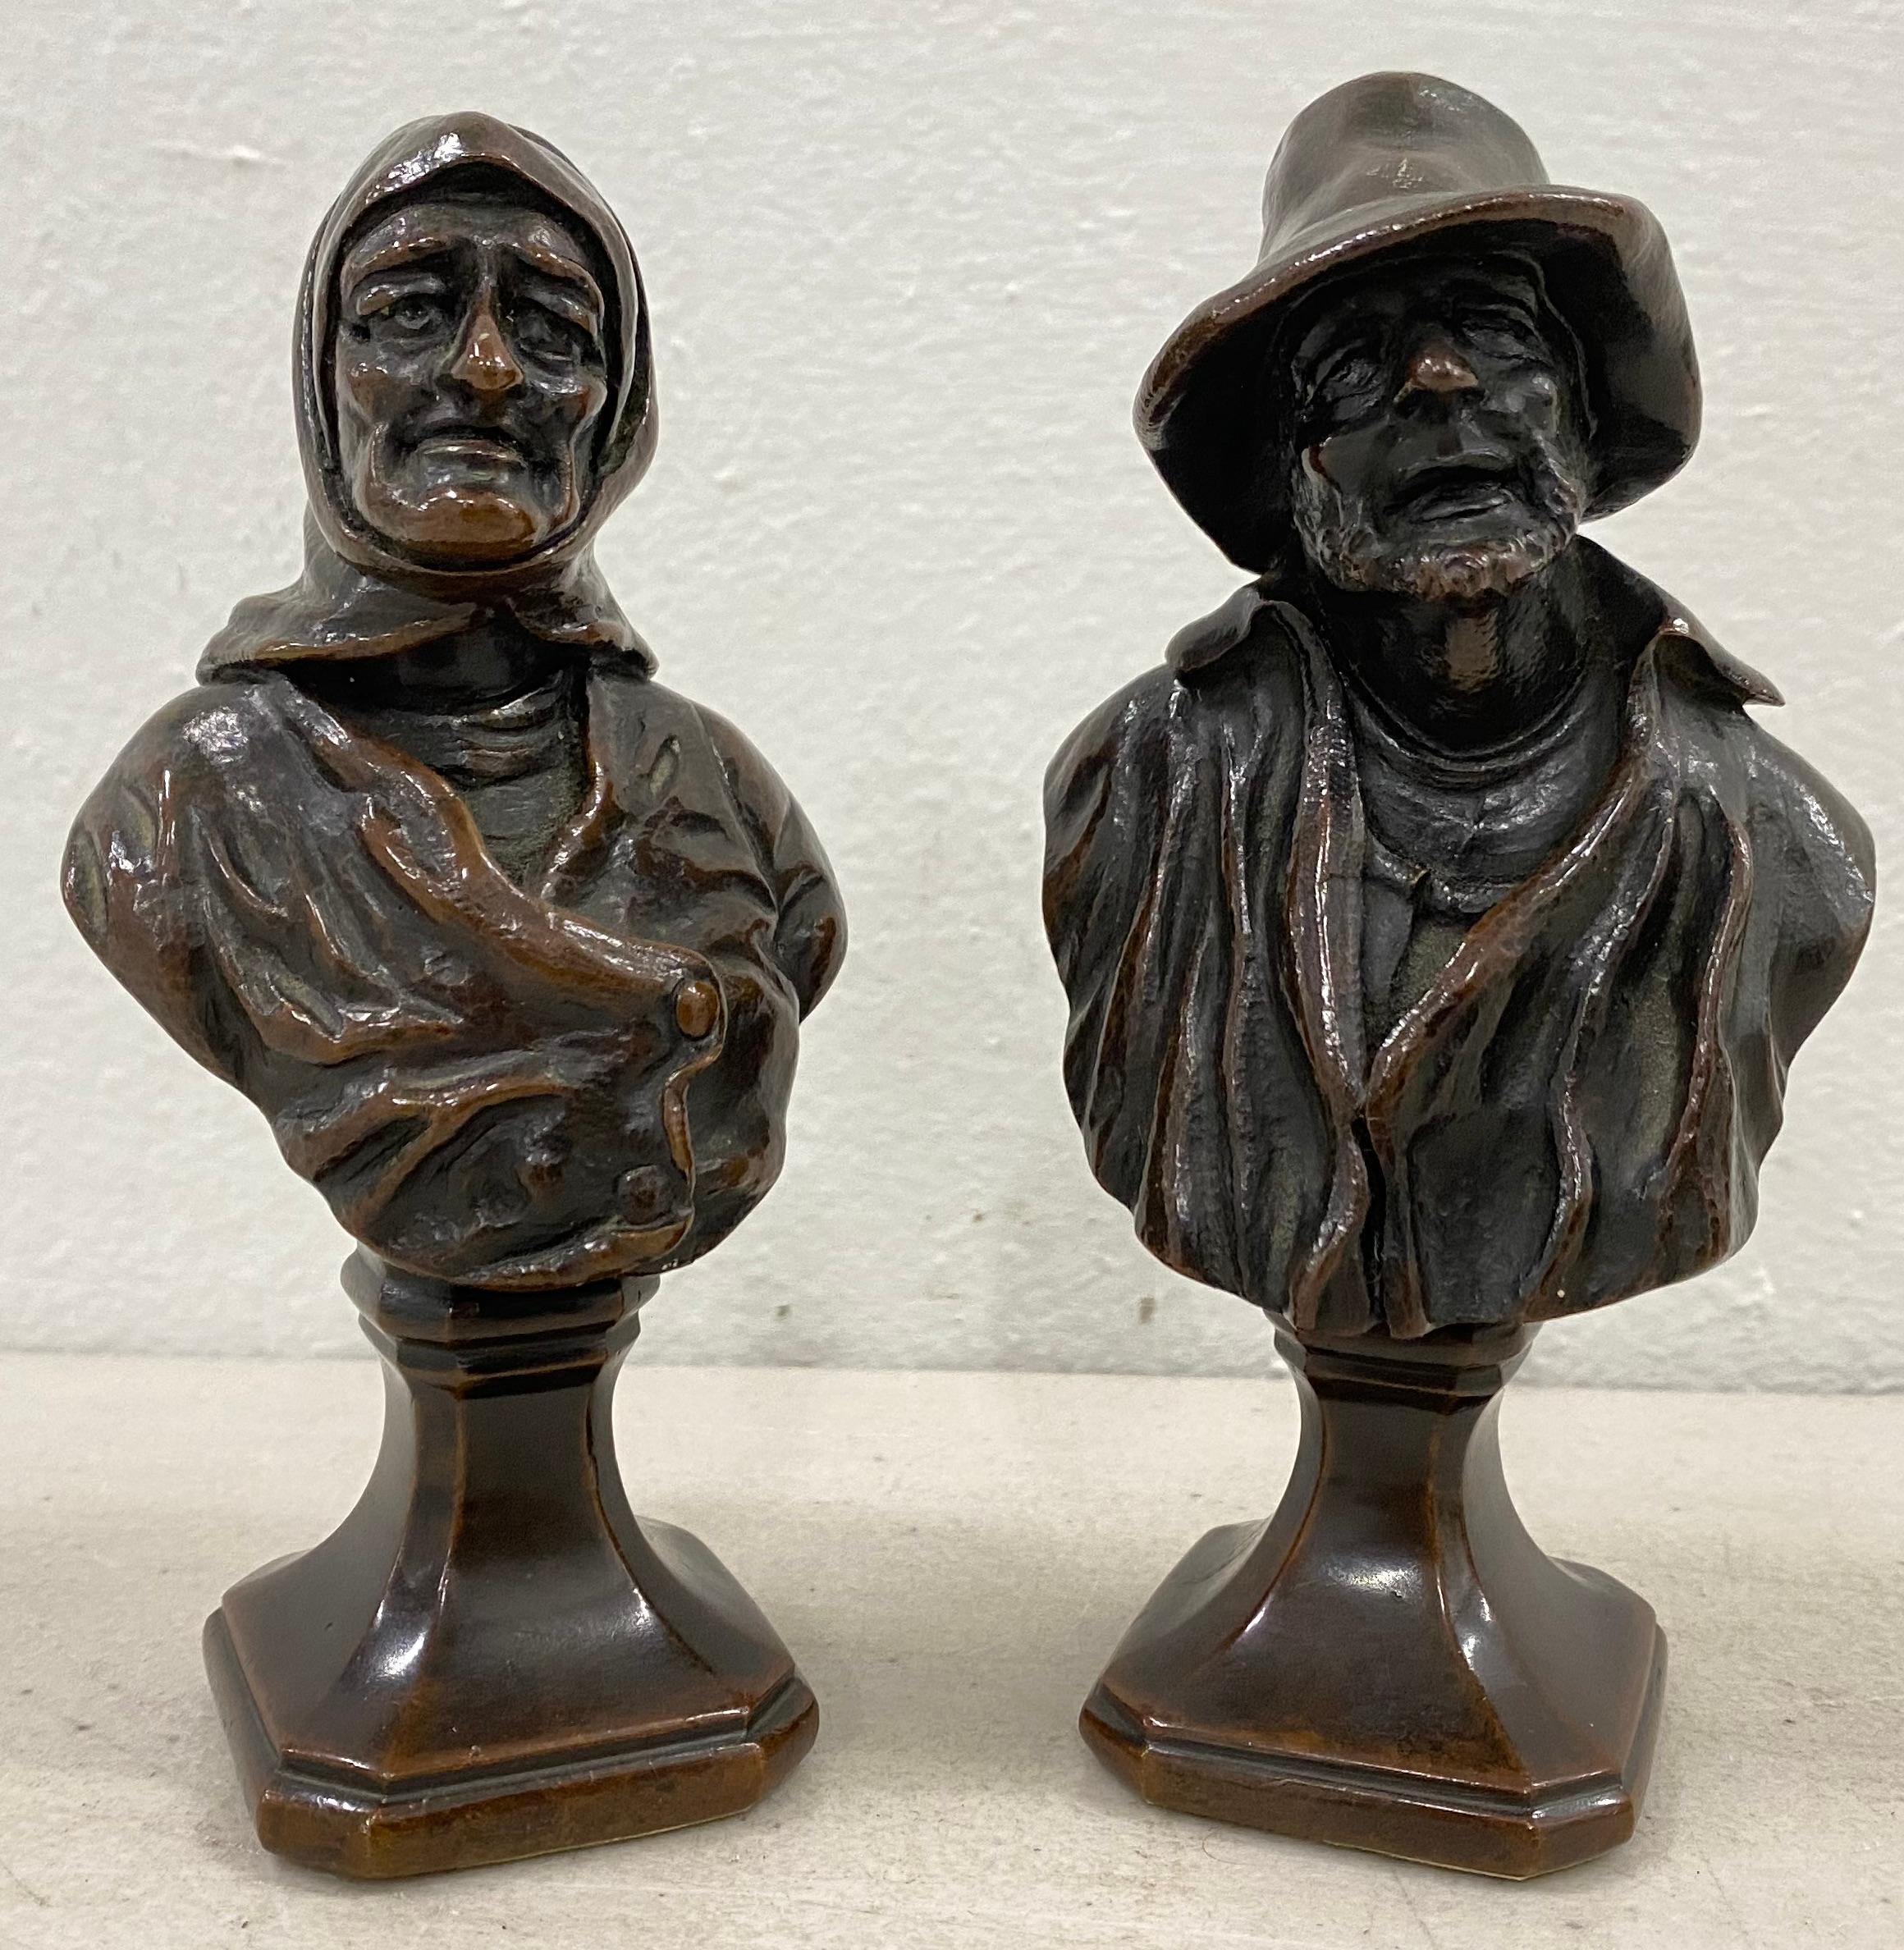 Unknown Figurative Sculpture - 19th Century Old Man & Woman Bronze Sculptures